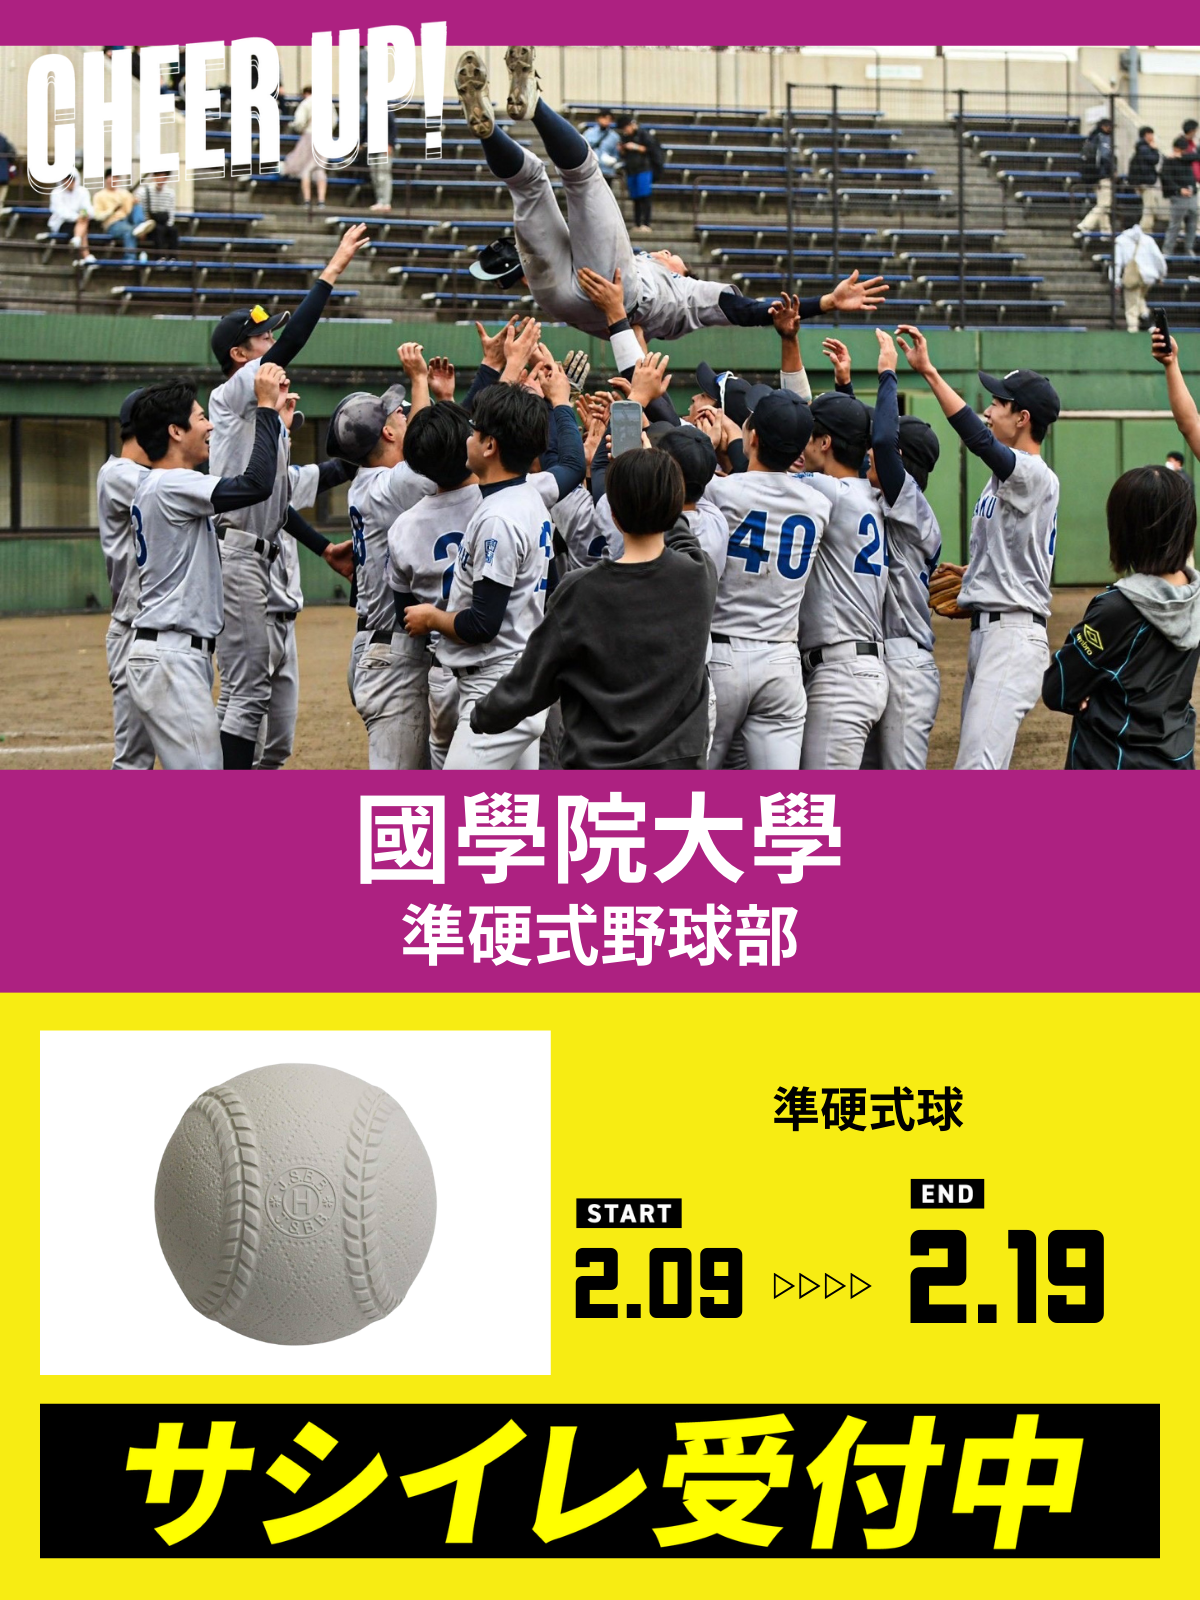 CHEER UP! for 國學院大學　準硬式野球部